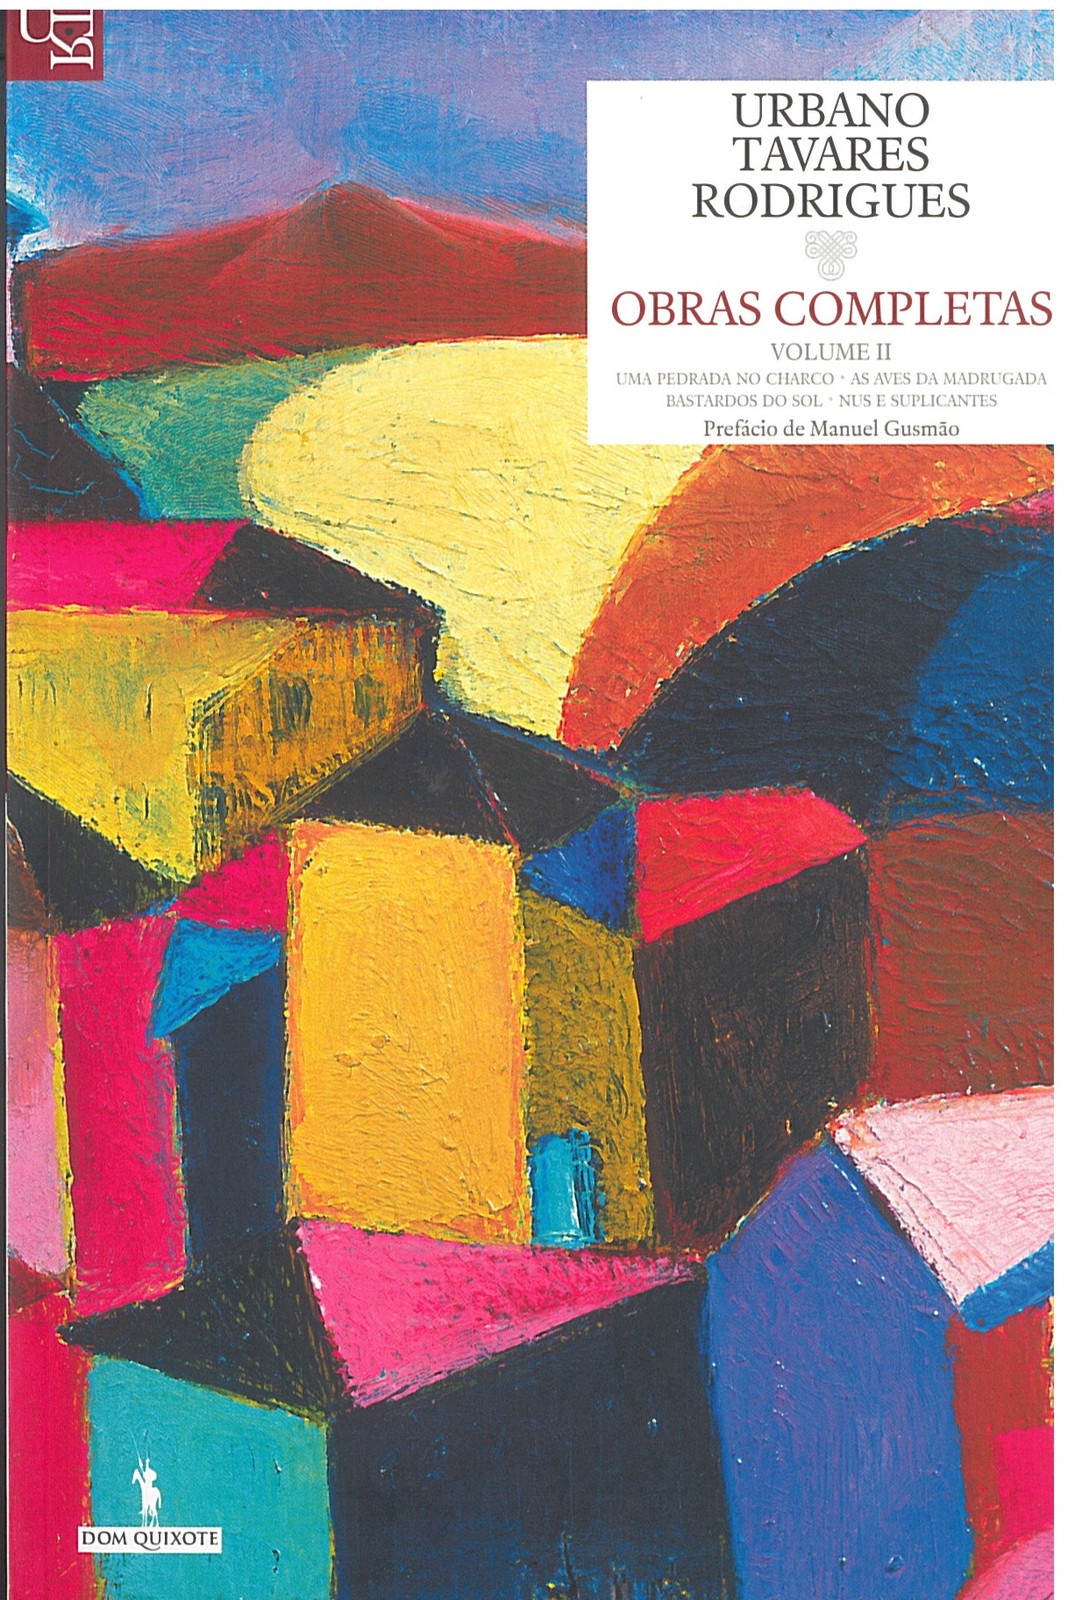 Urbano Tavares Rodrigues - Obras Completas, II